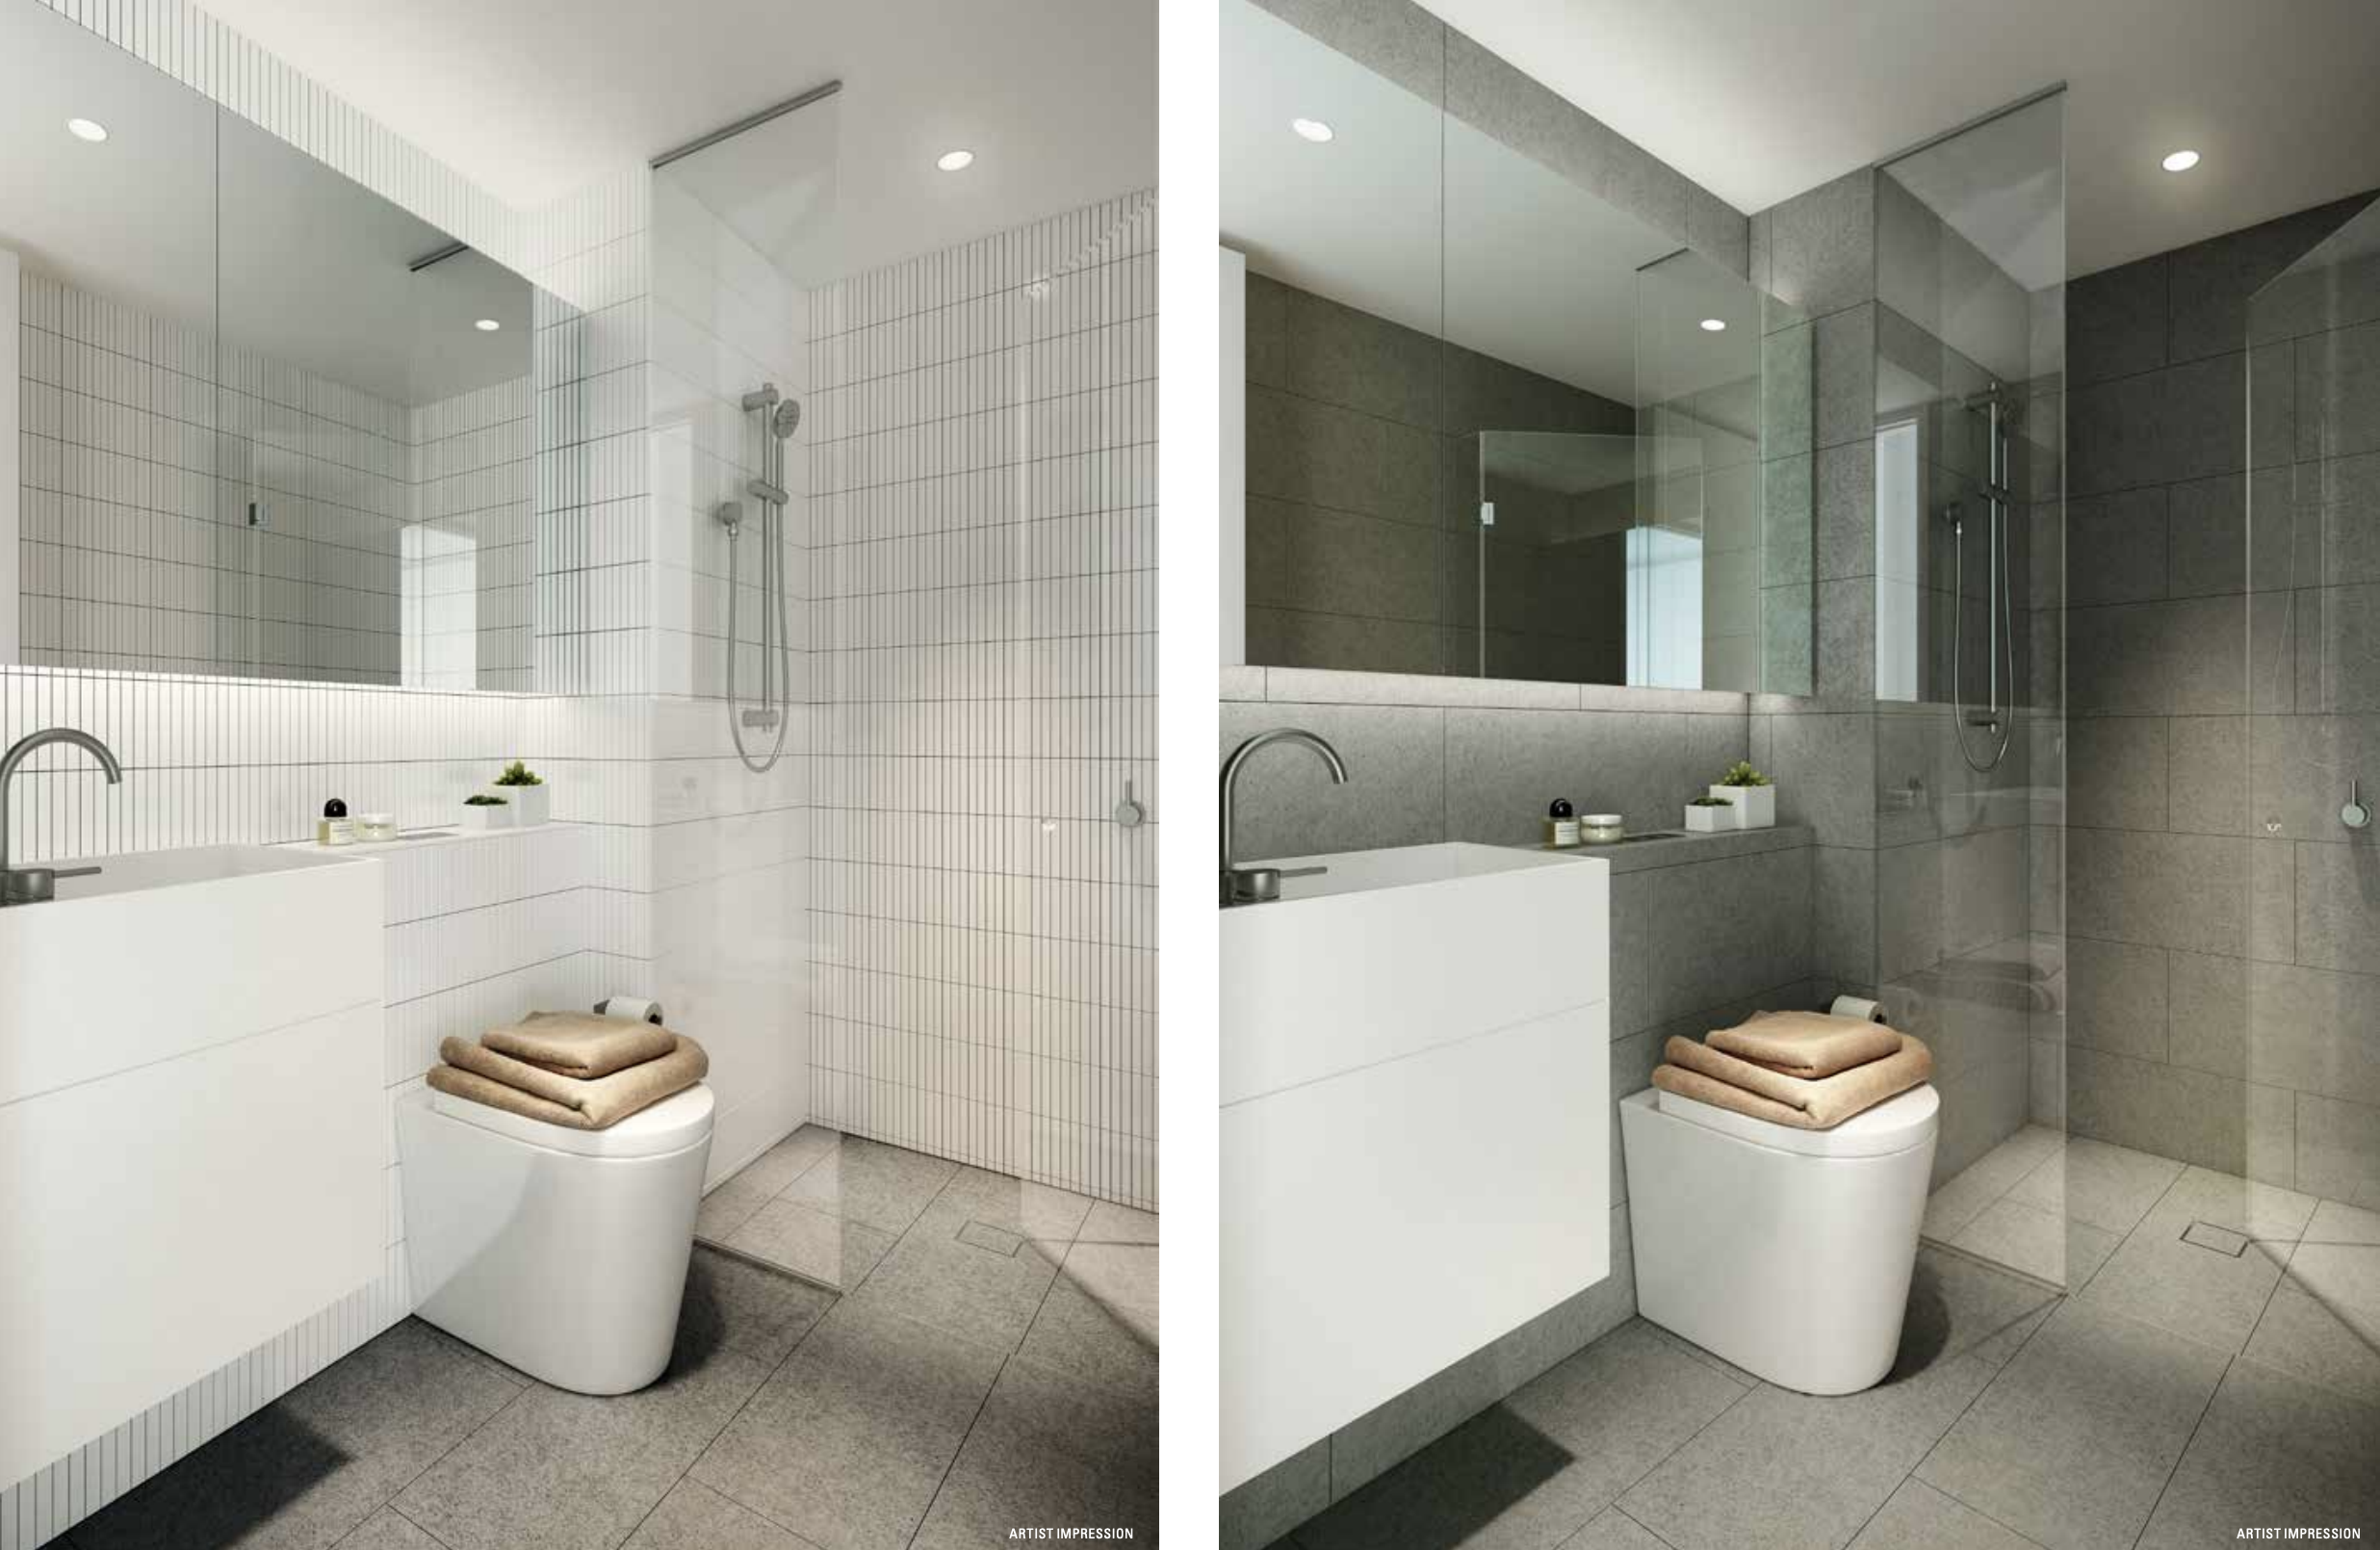 Australia 108's bathroom designs.